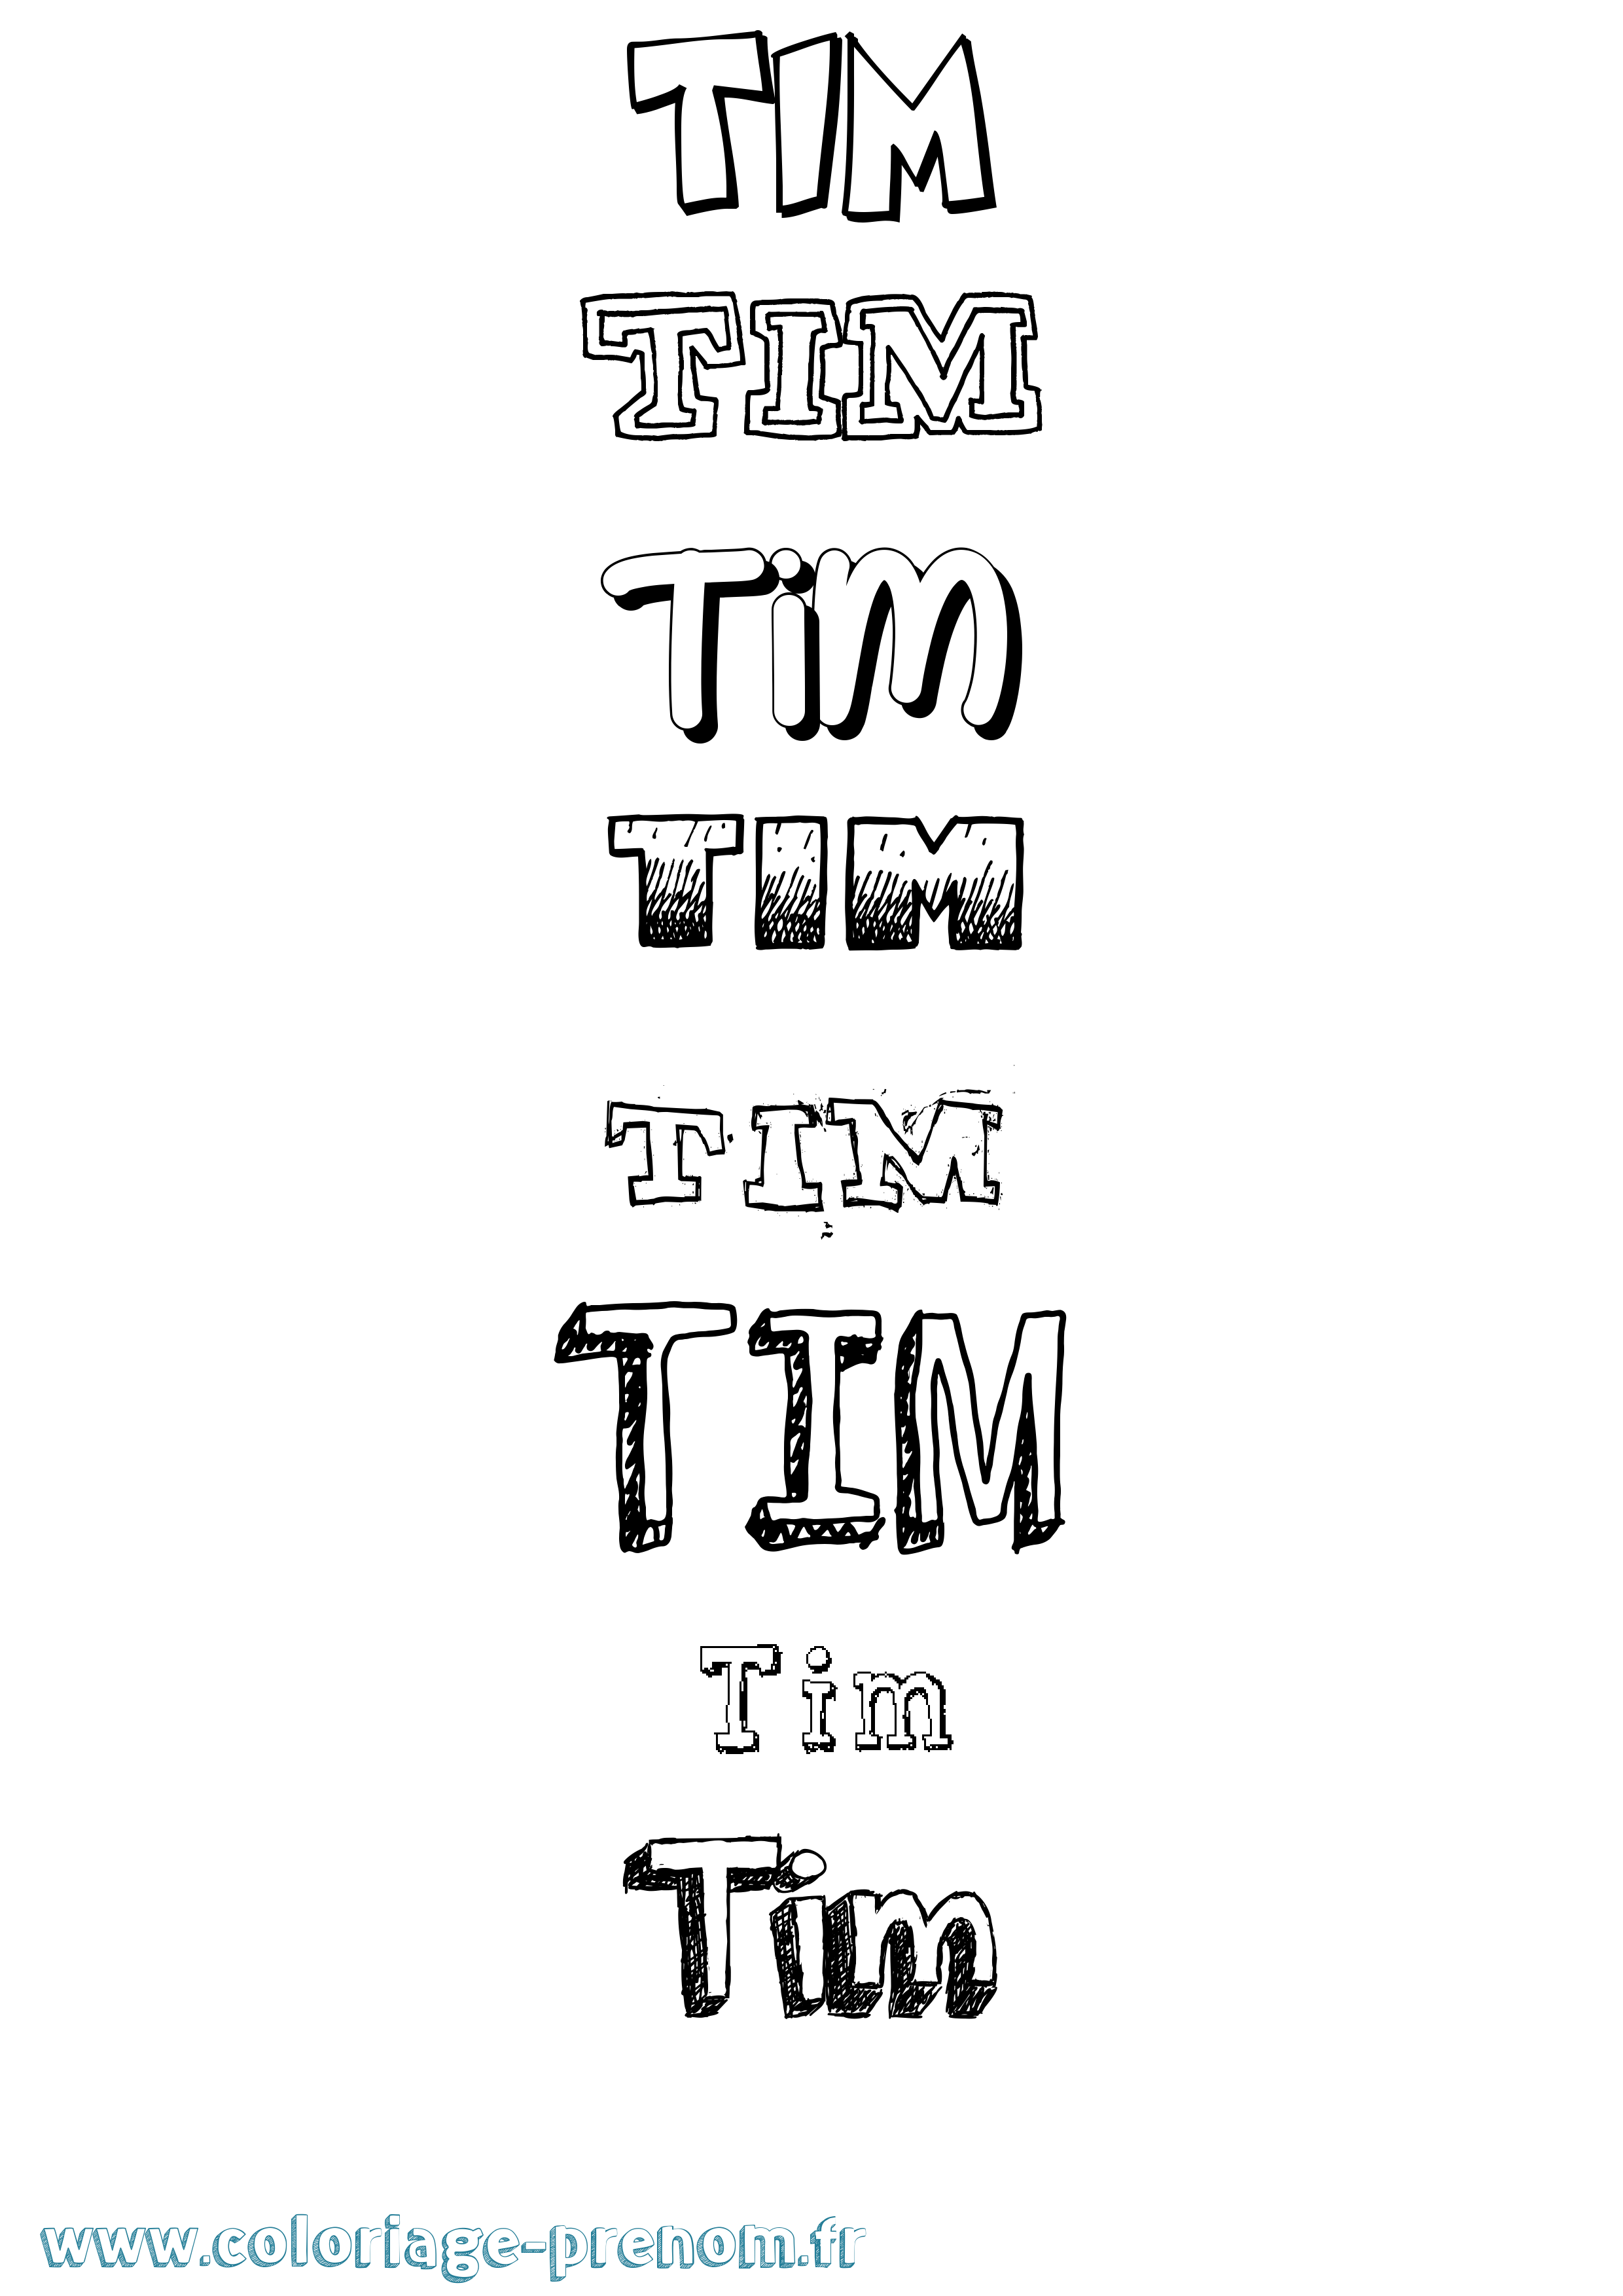 Coloriage prénom Tim